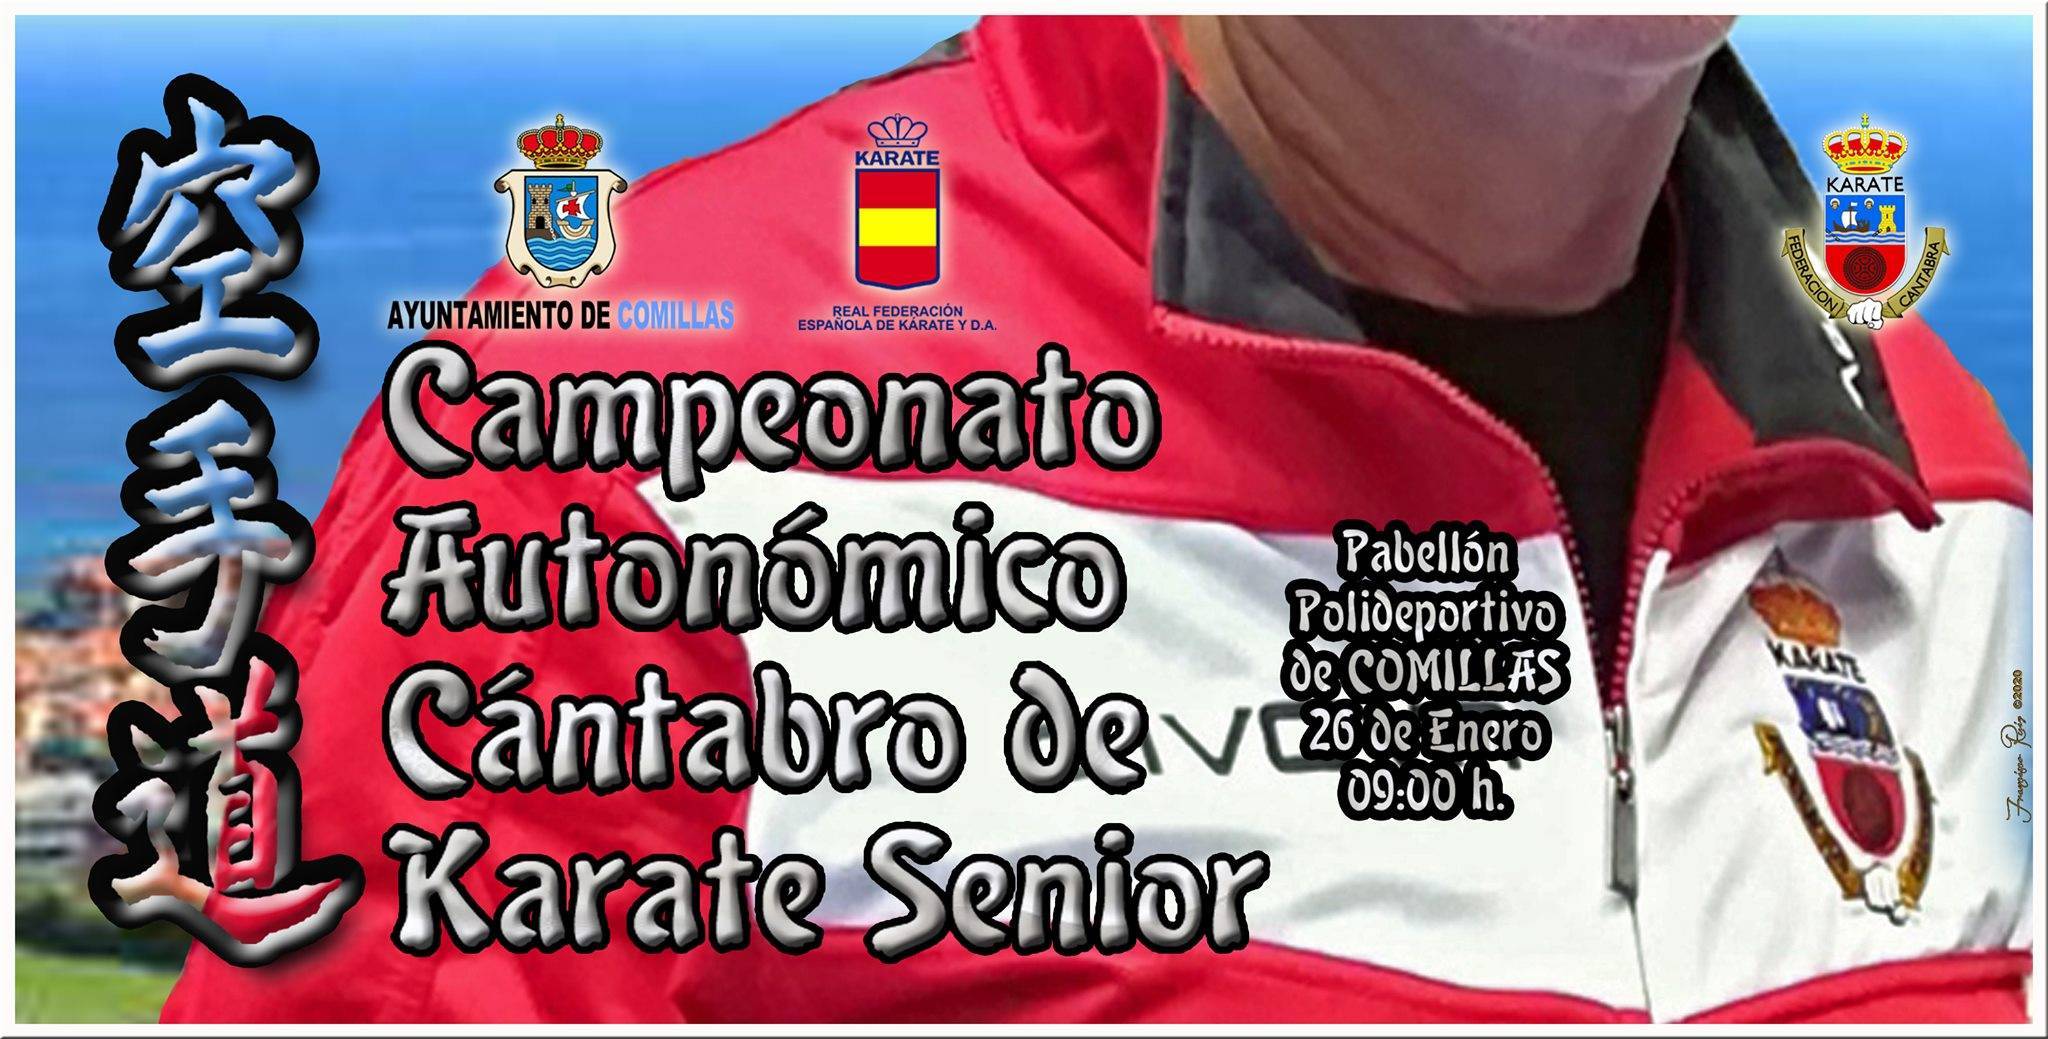 Campeonato autonómico cántabro de kárate senior 2020 - Comillas (Cantabria)